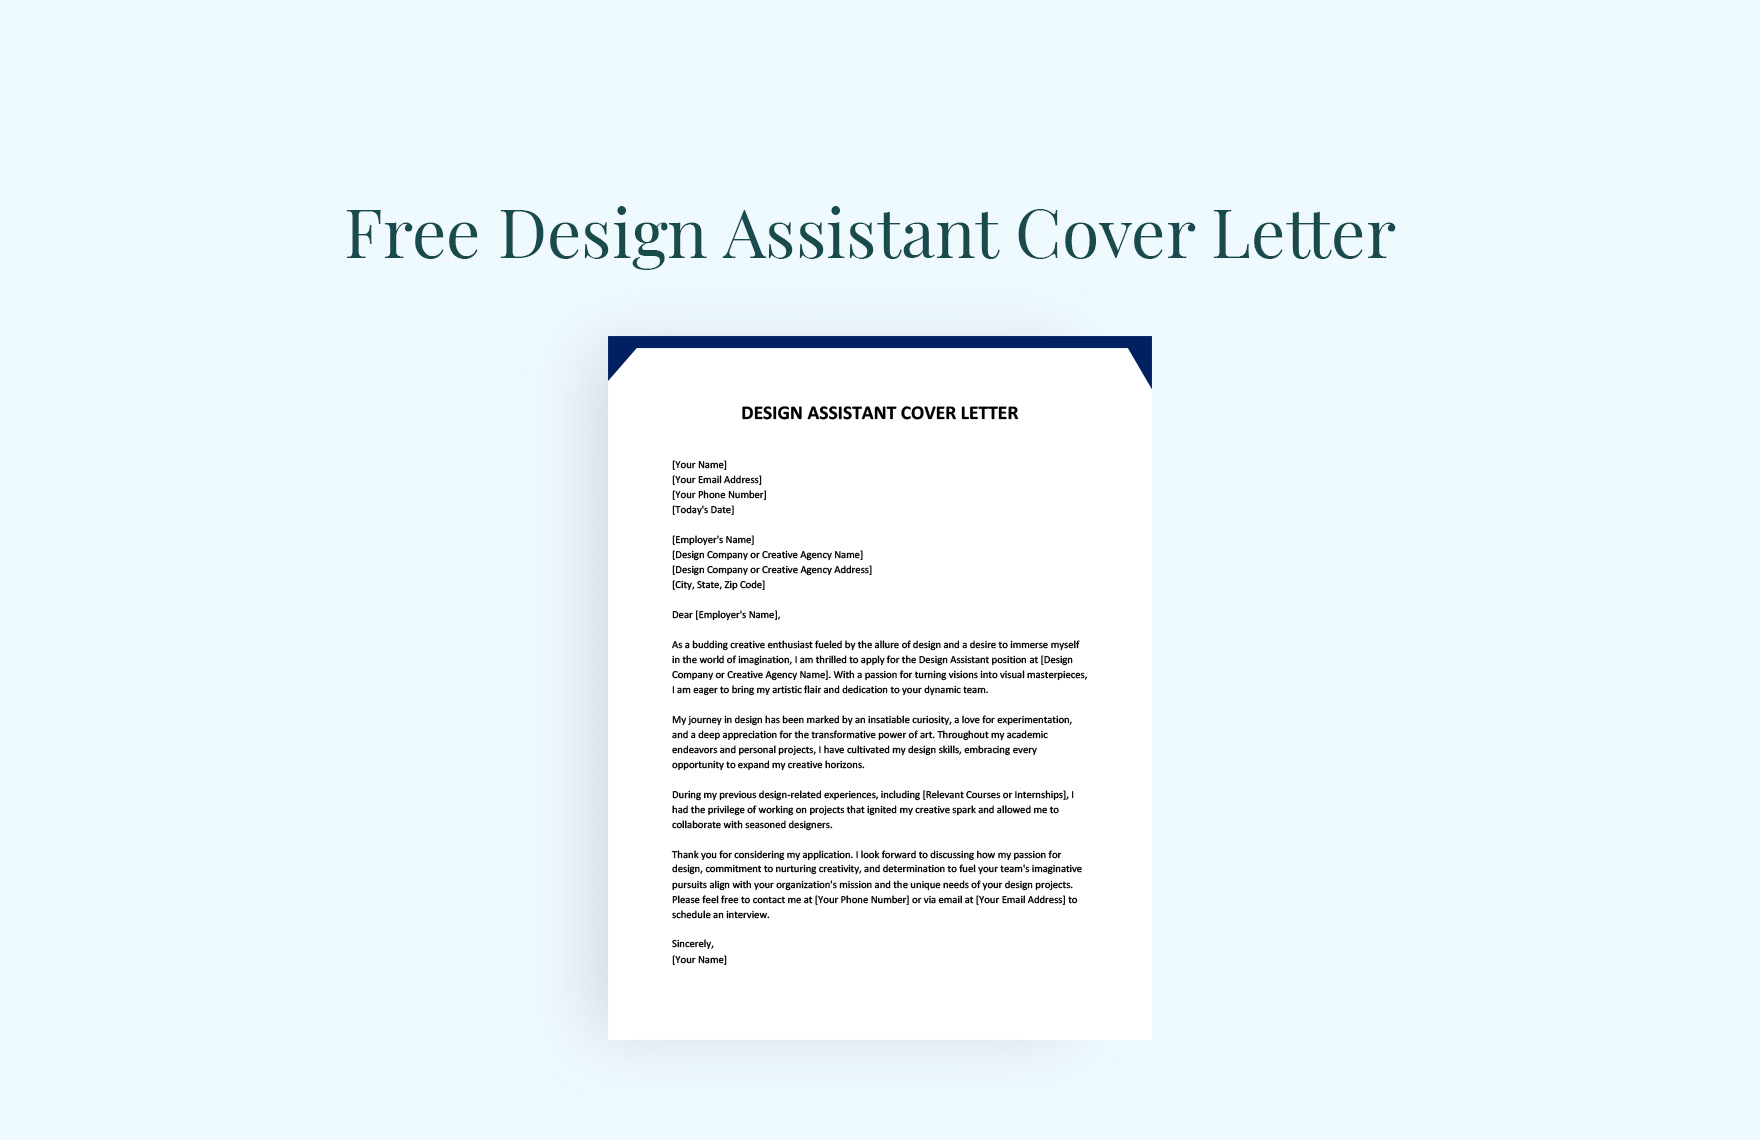 Design Assistant Cover Letter